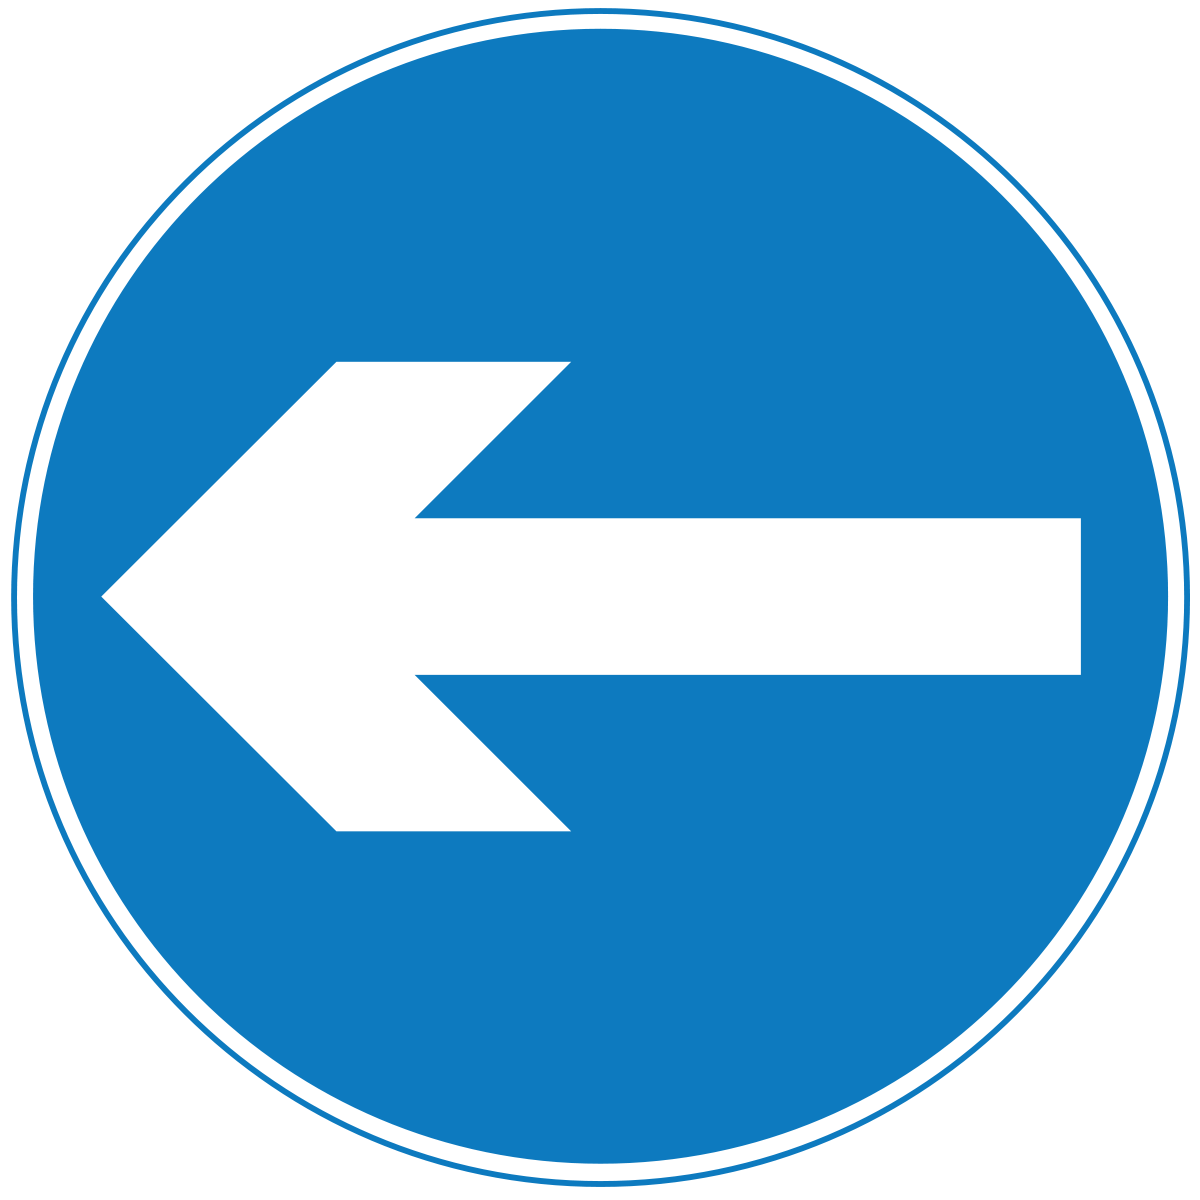 Turn left (right if symbol is reversed)